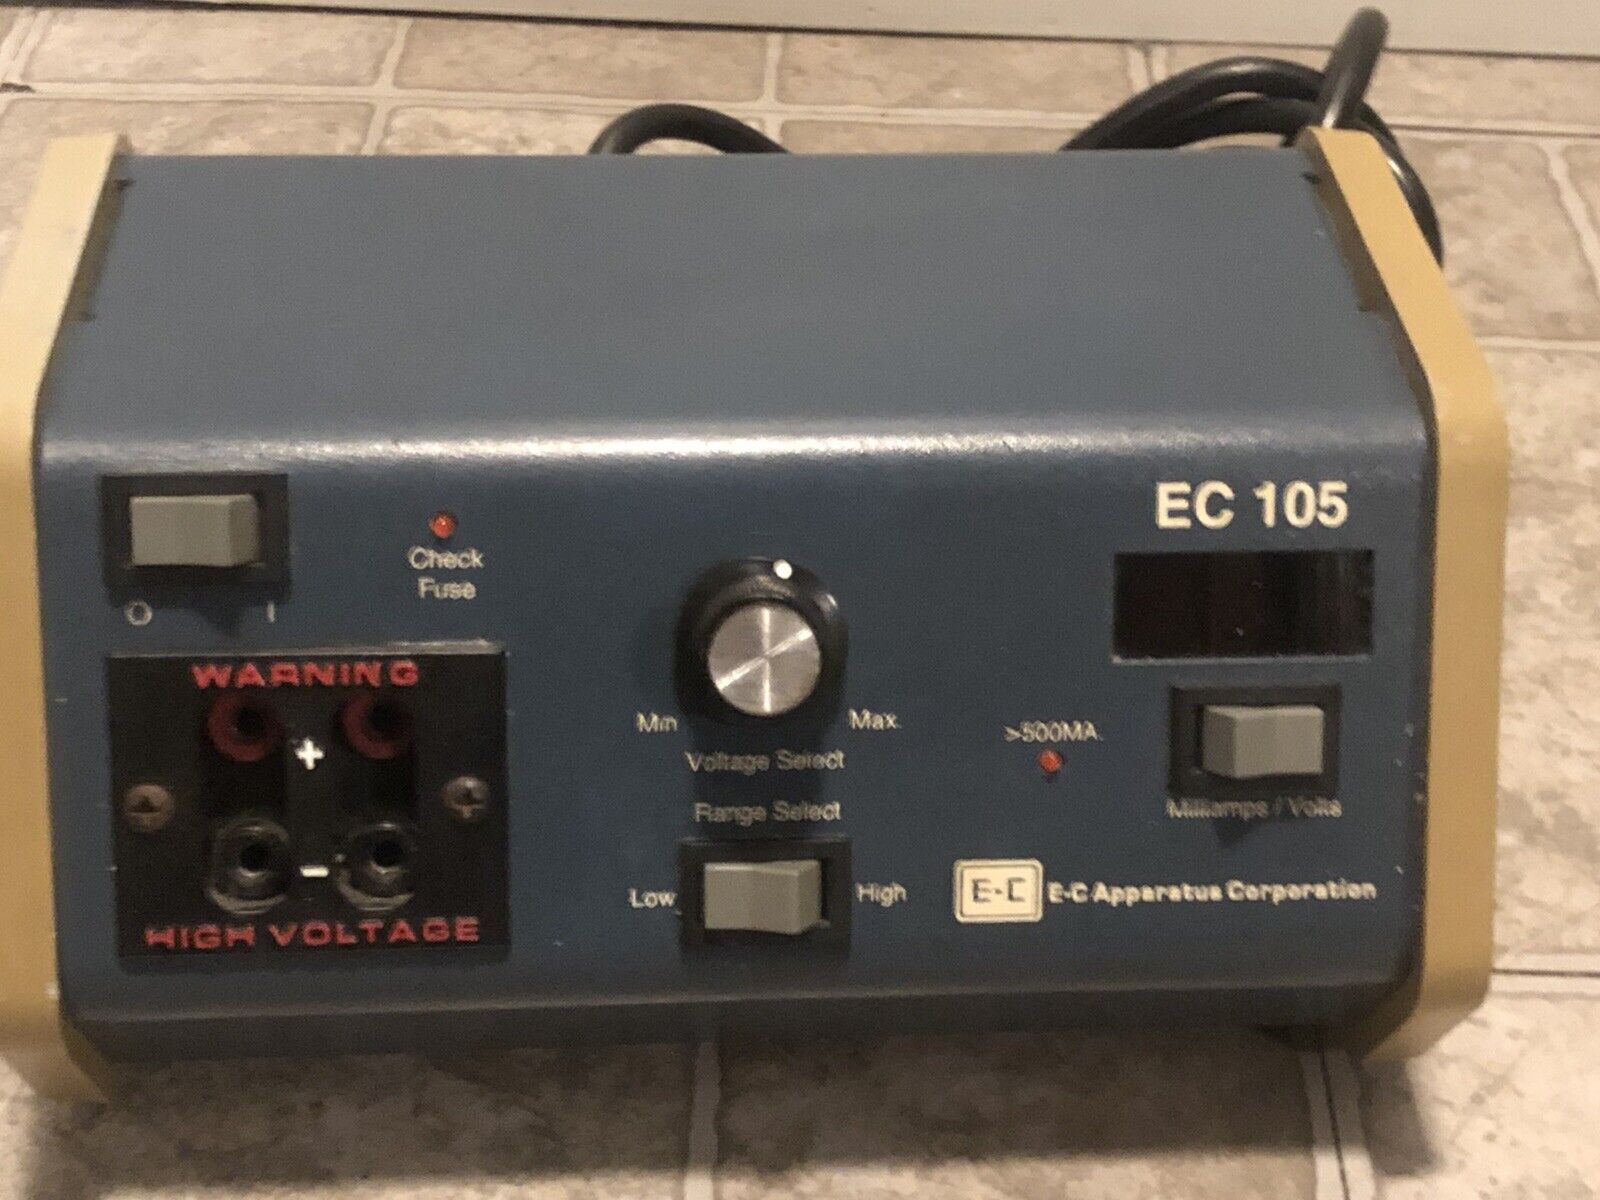 E-C Apparatus 120v 60Hz Electrophoresis Power Supply EC 105 (FB-105) - Tested